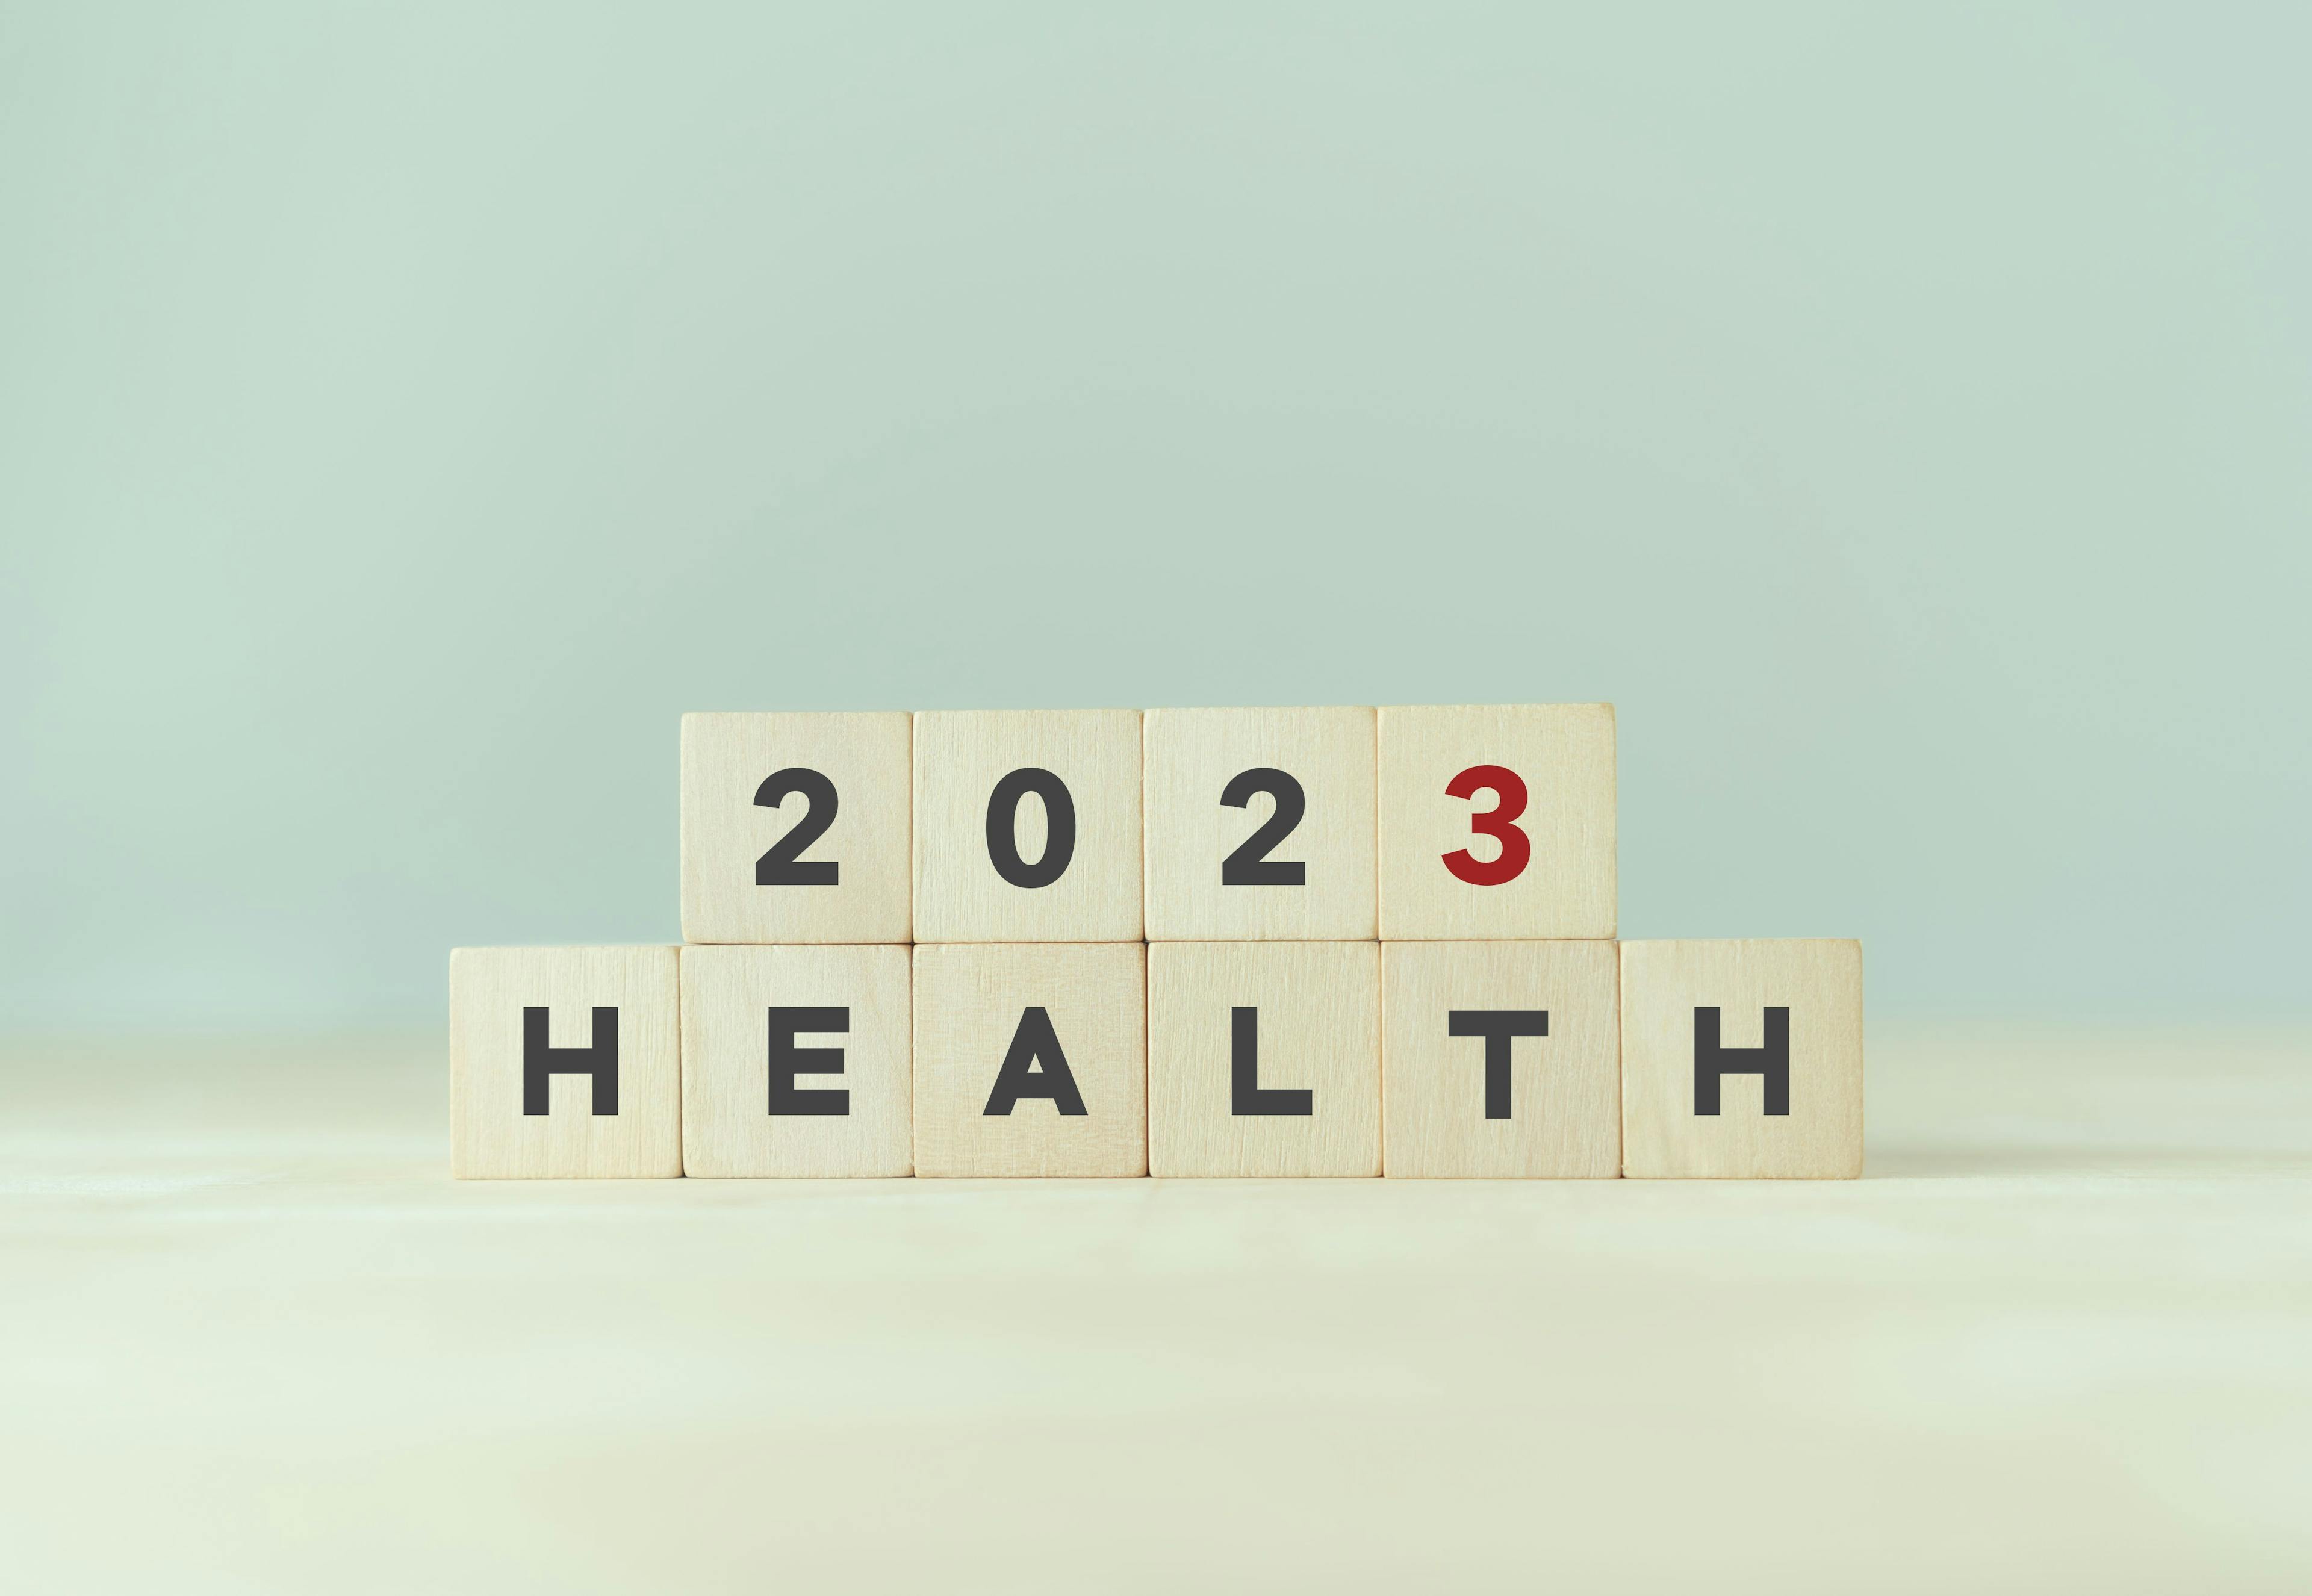 Health Care Trends 2023 Concept | image credit: Parradee - stock.adobe.com